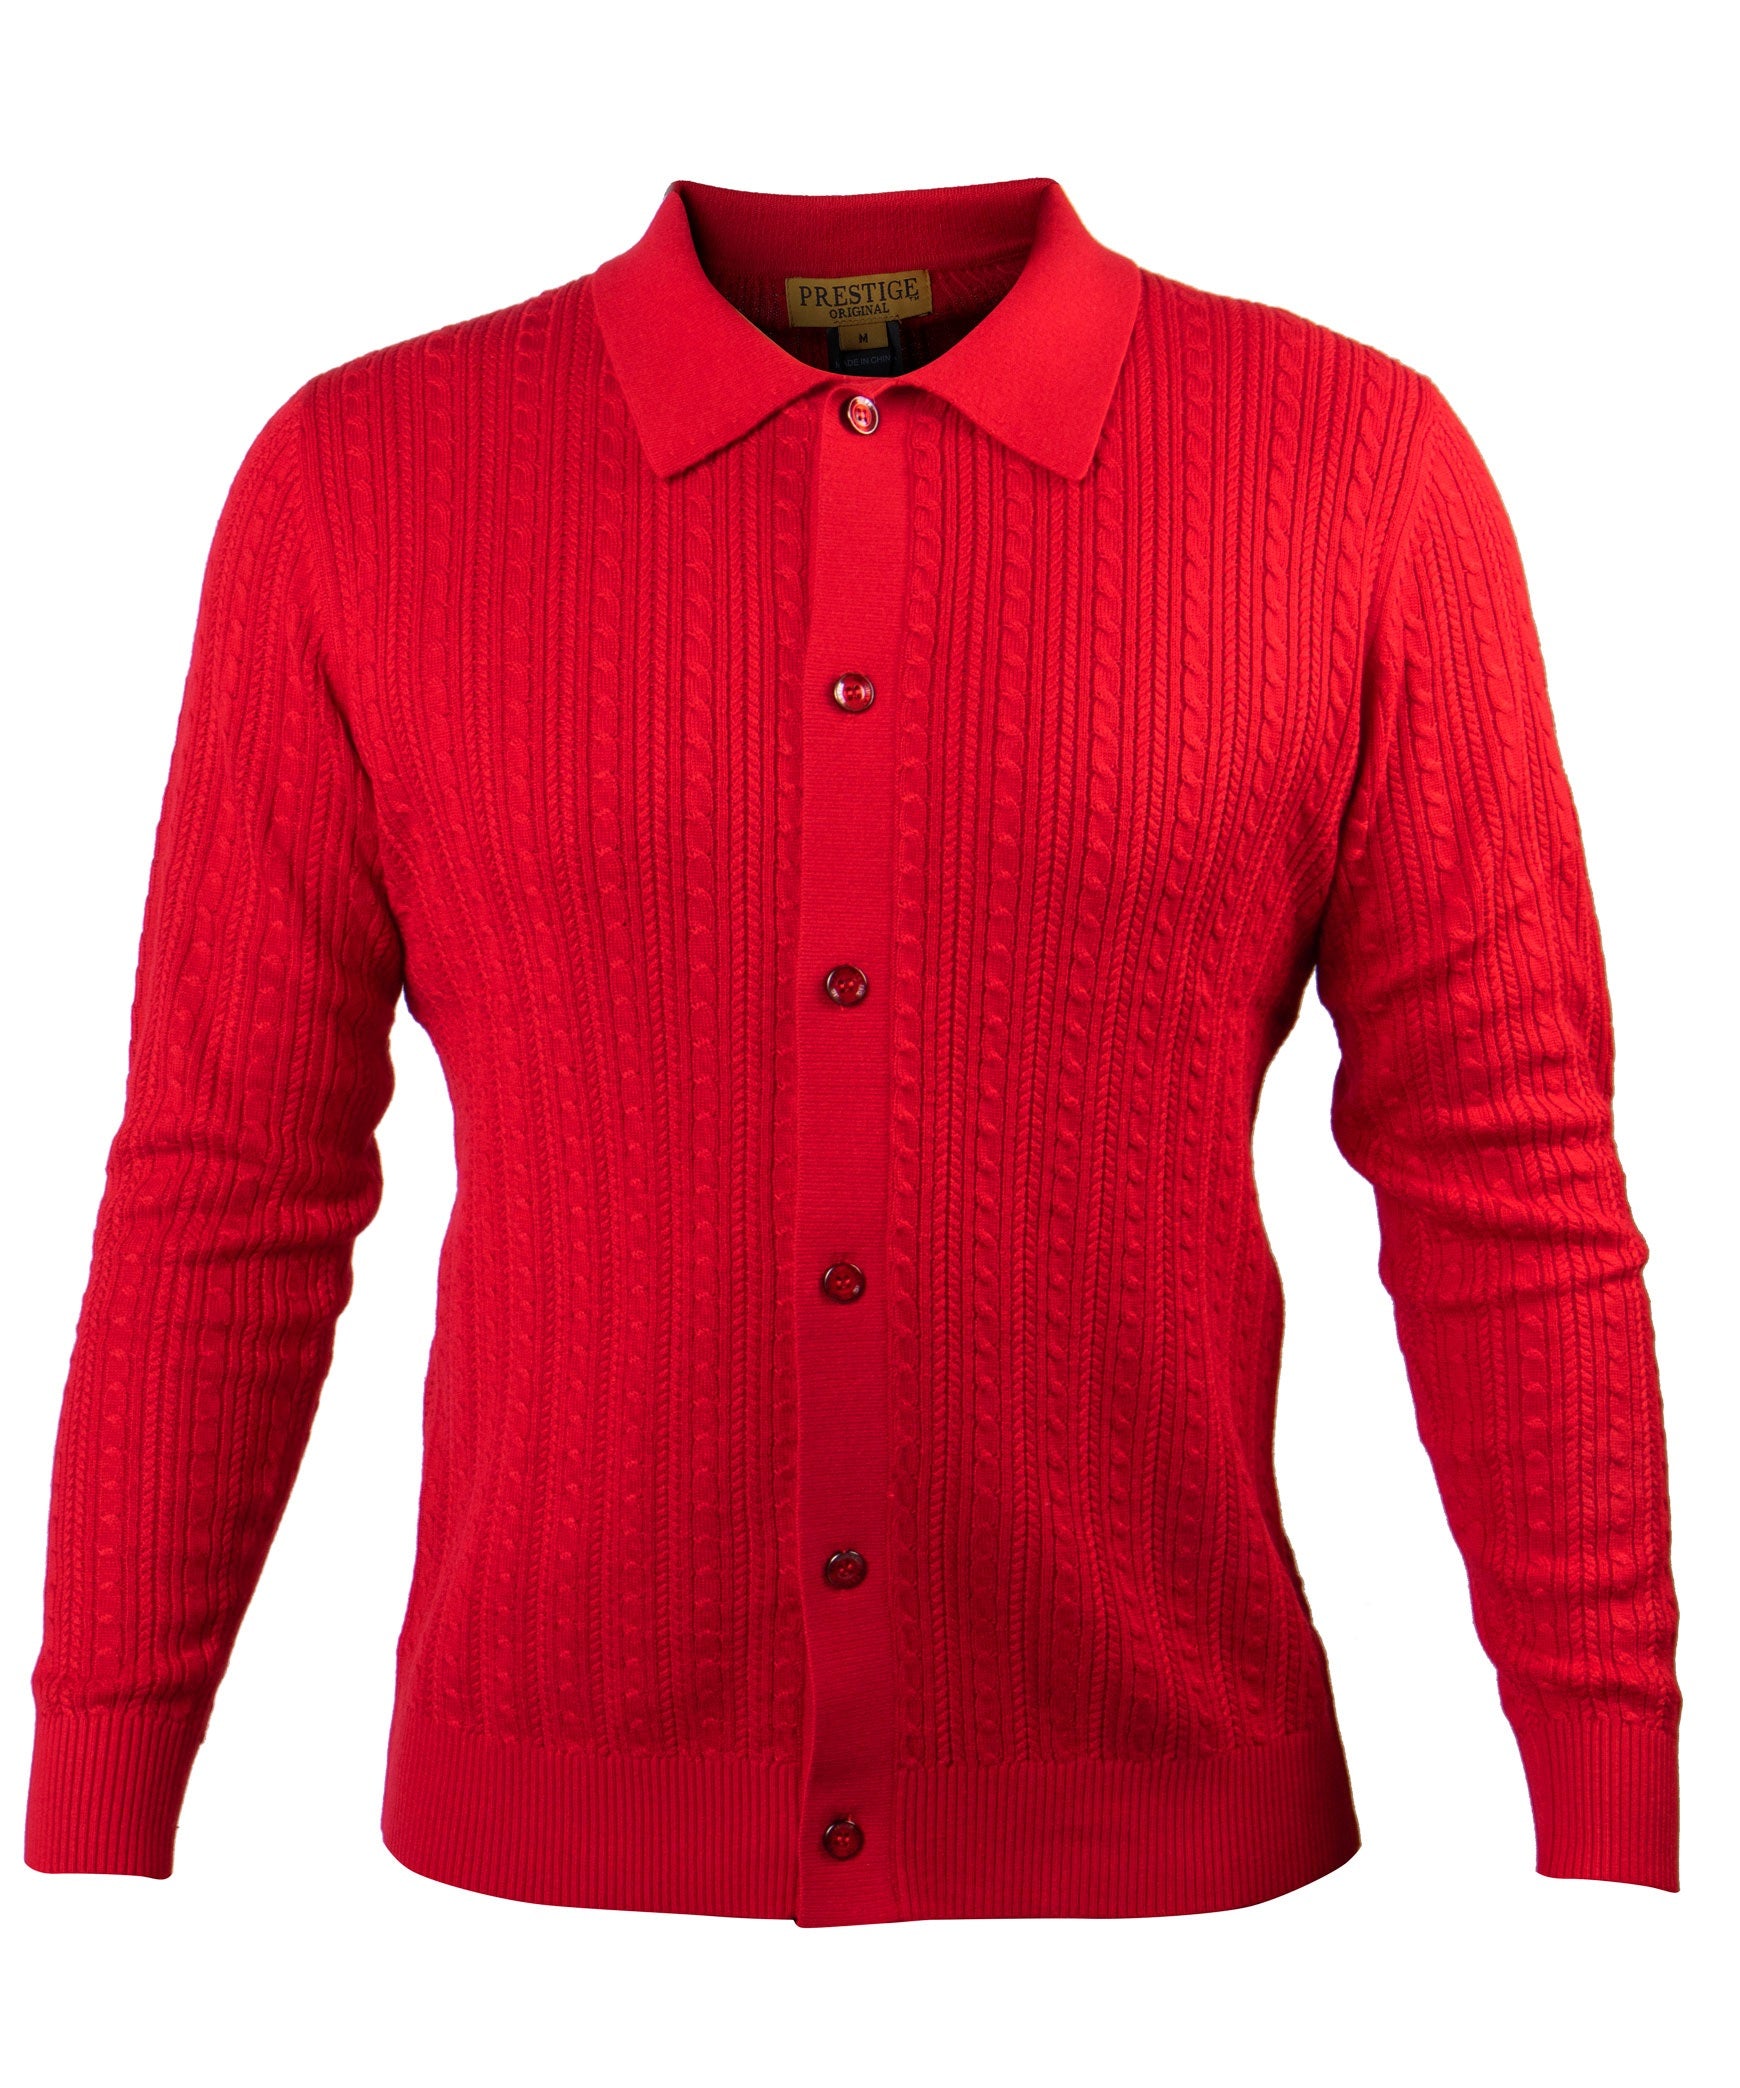 Prestige Cable polo style Sweater